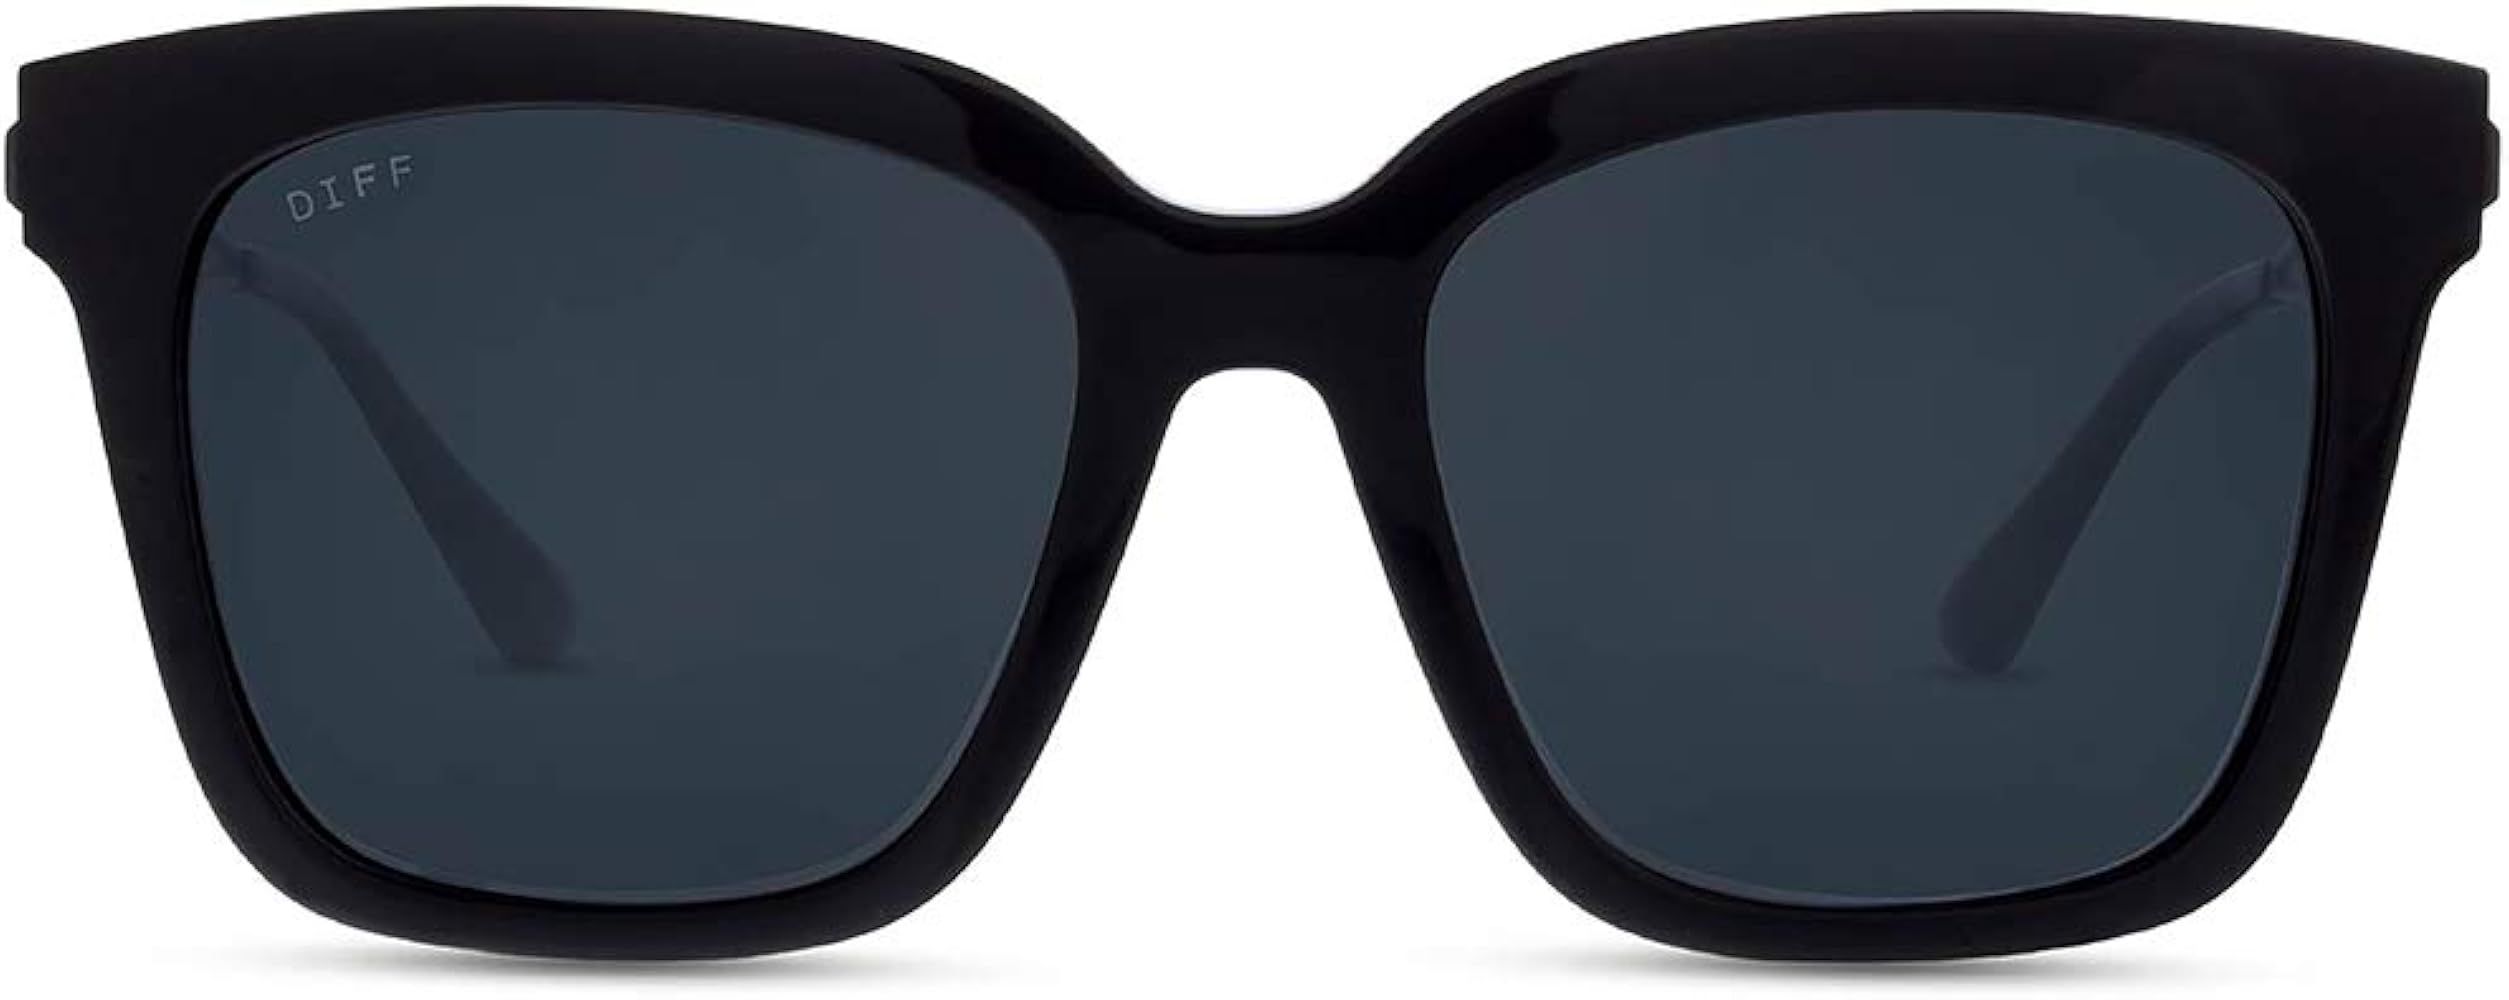 Eyewear - Bella - Designer Square Sunglasses for Men & Women - 100% UVA/UVB [Polarized] | Amazon (US)